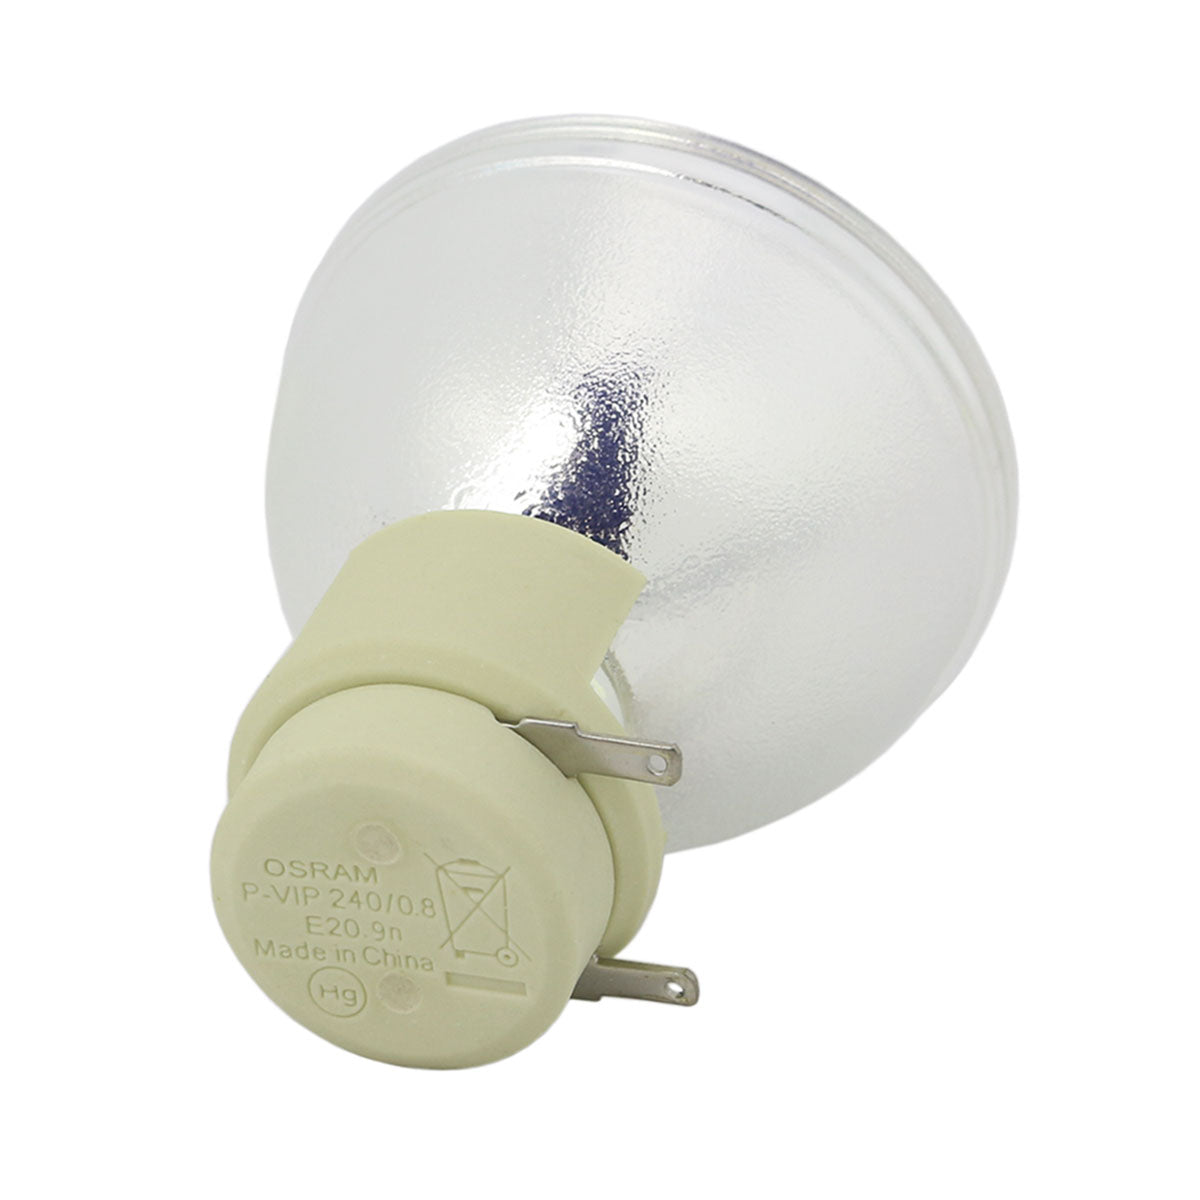 BenQ 5J.J9H05.001 Osram Projector Bare Lamp